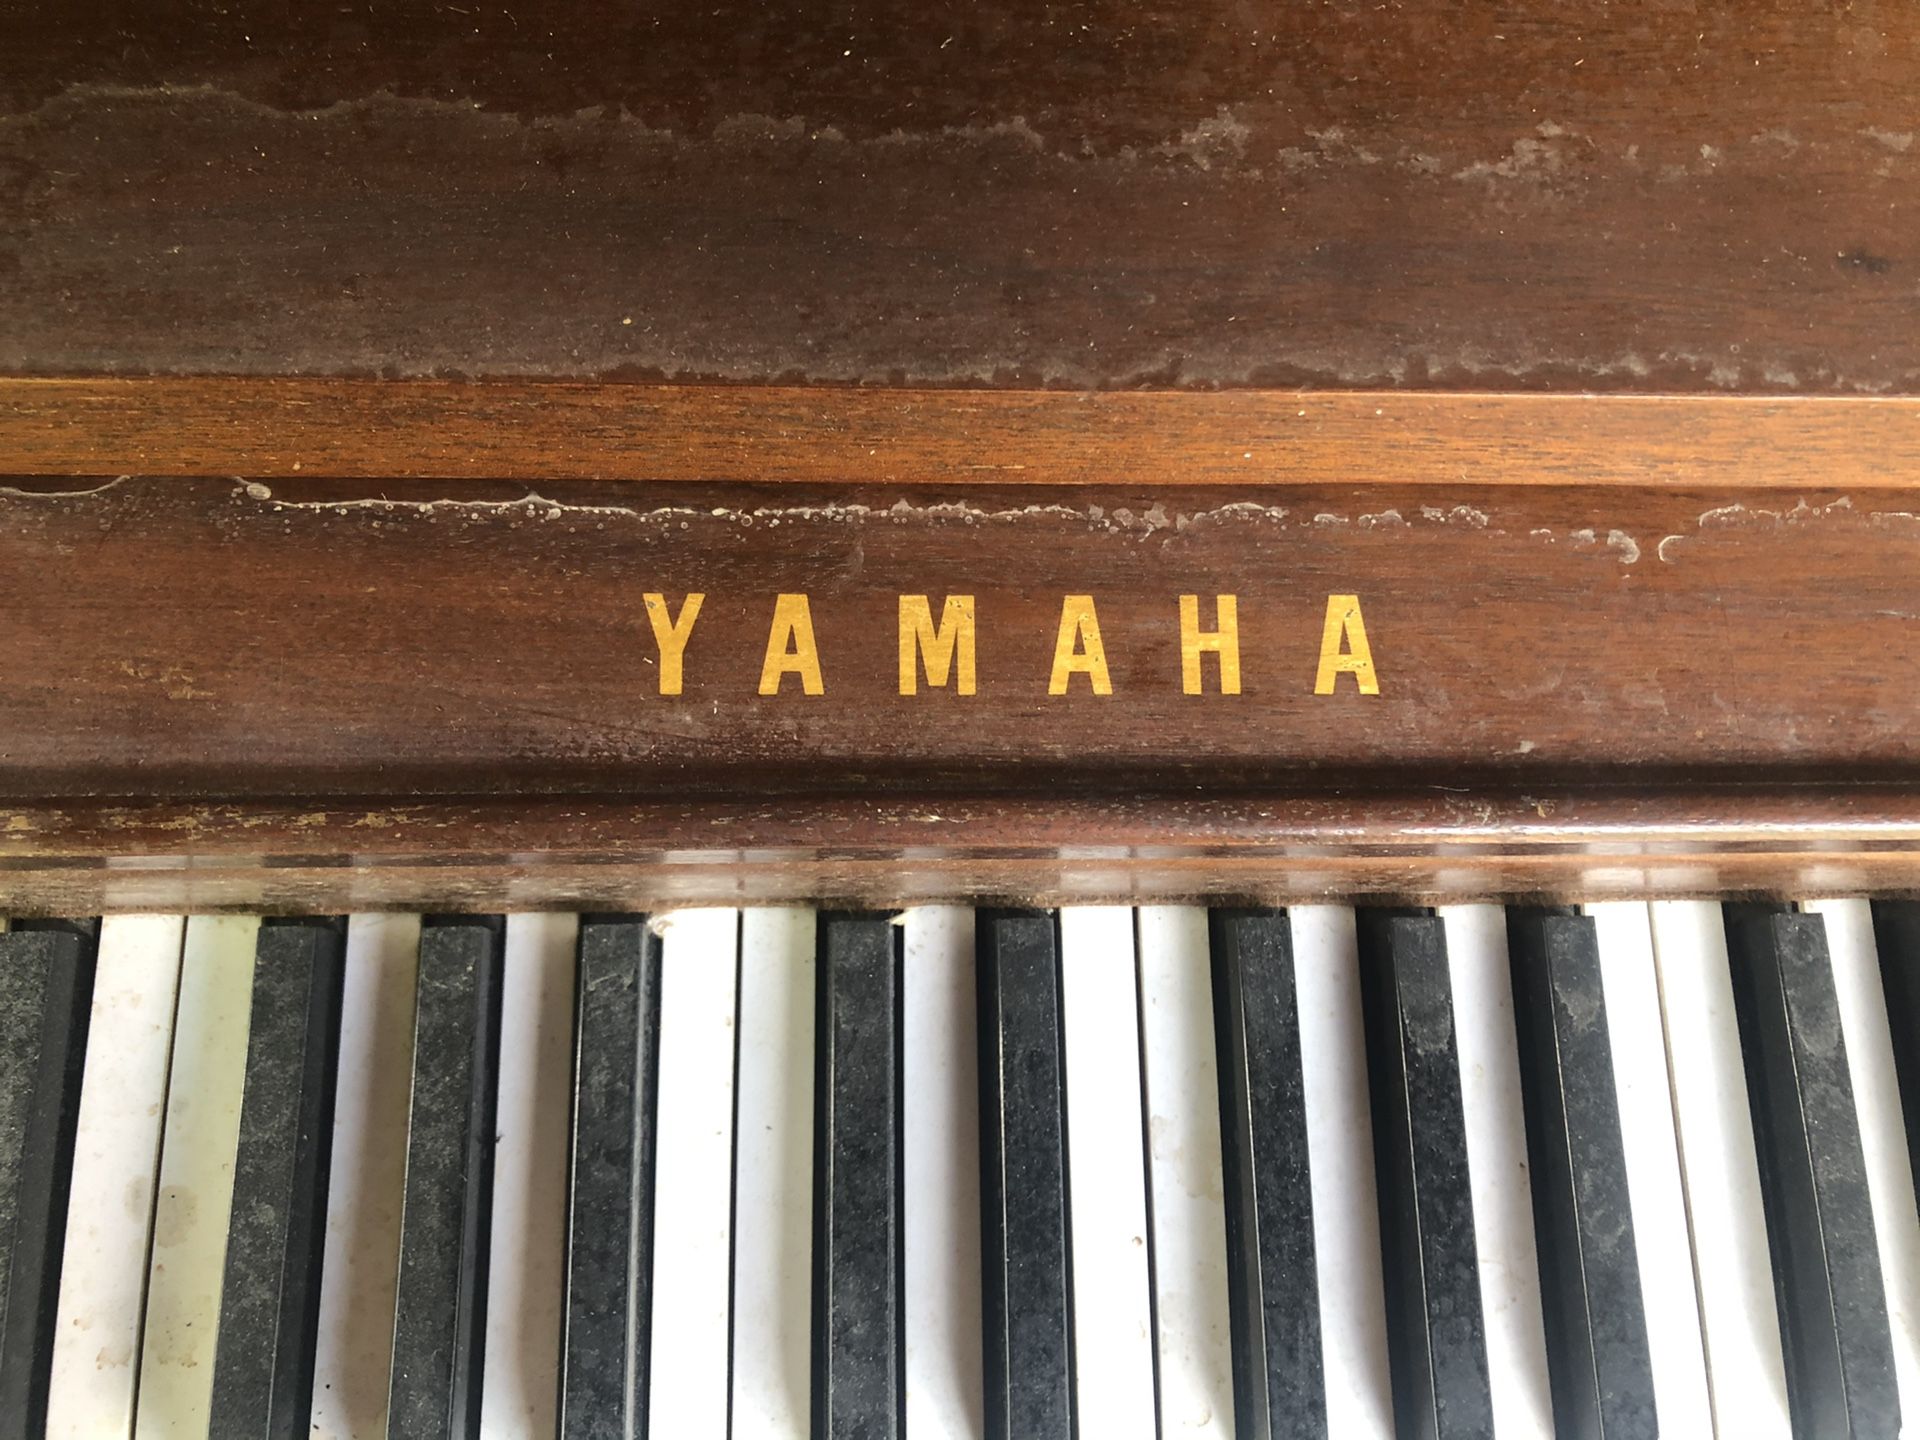 Yamaha Acoustic pianos